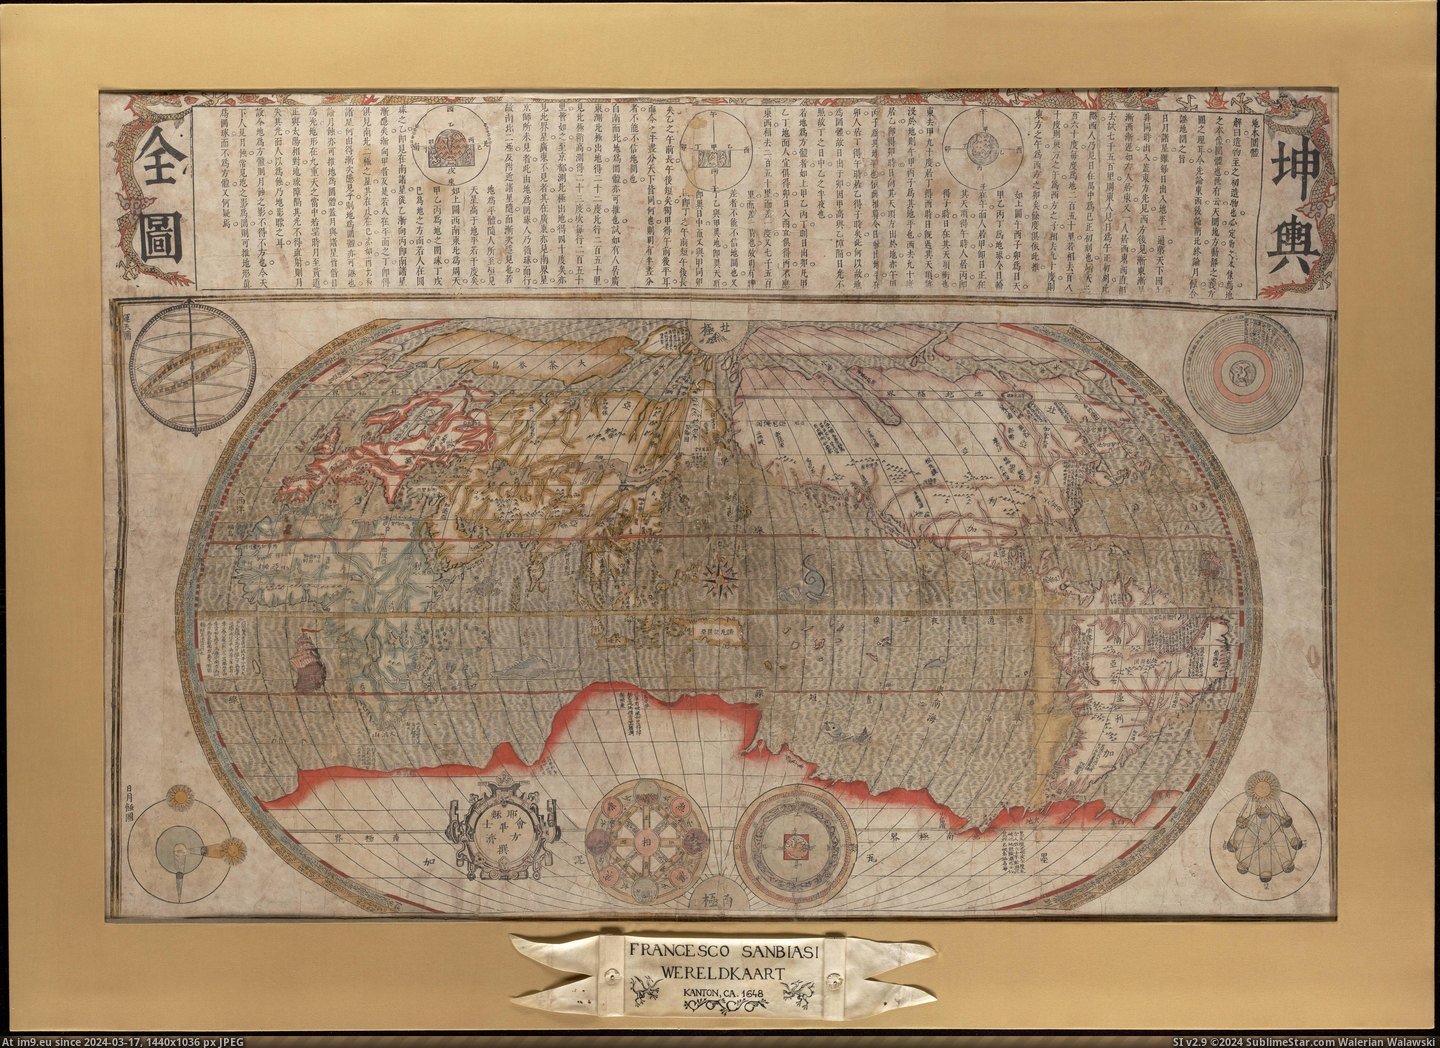 #World #Map #8682x6269 #Sanbiasi #Chinese #Francesco [Mapporn] Chinese World map, 1648, By Francesco Sanbiasi [8682x6269] Pic. (Изображение из альбом My r/MAPS favs))